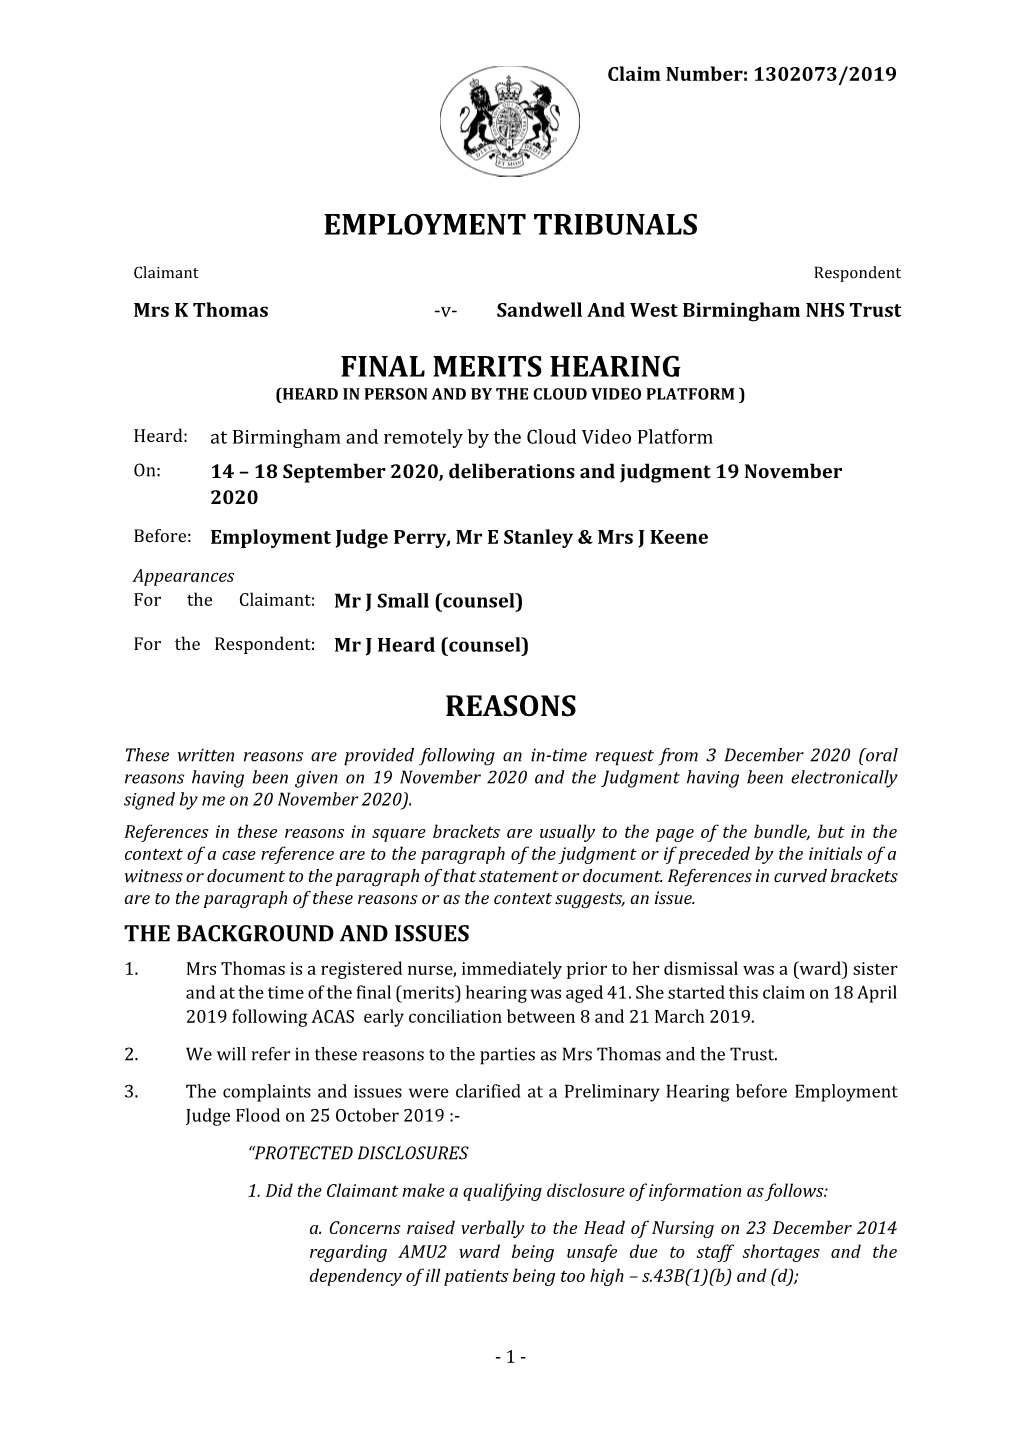 Employment Tribunals Final Merits Hearing Reasons